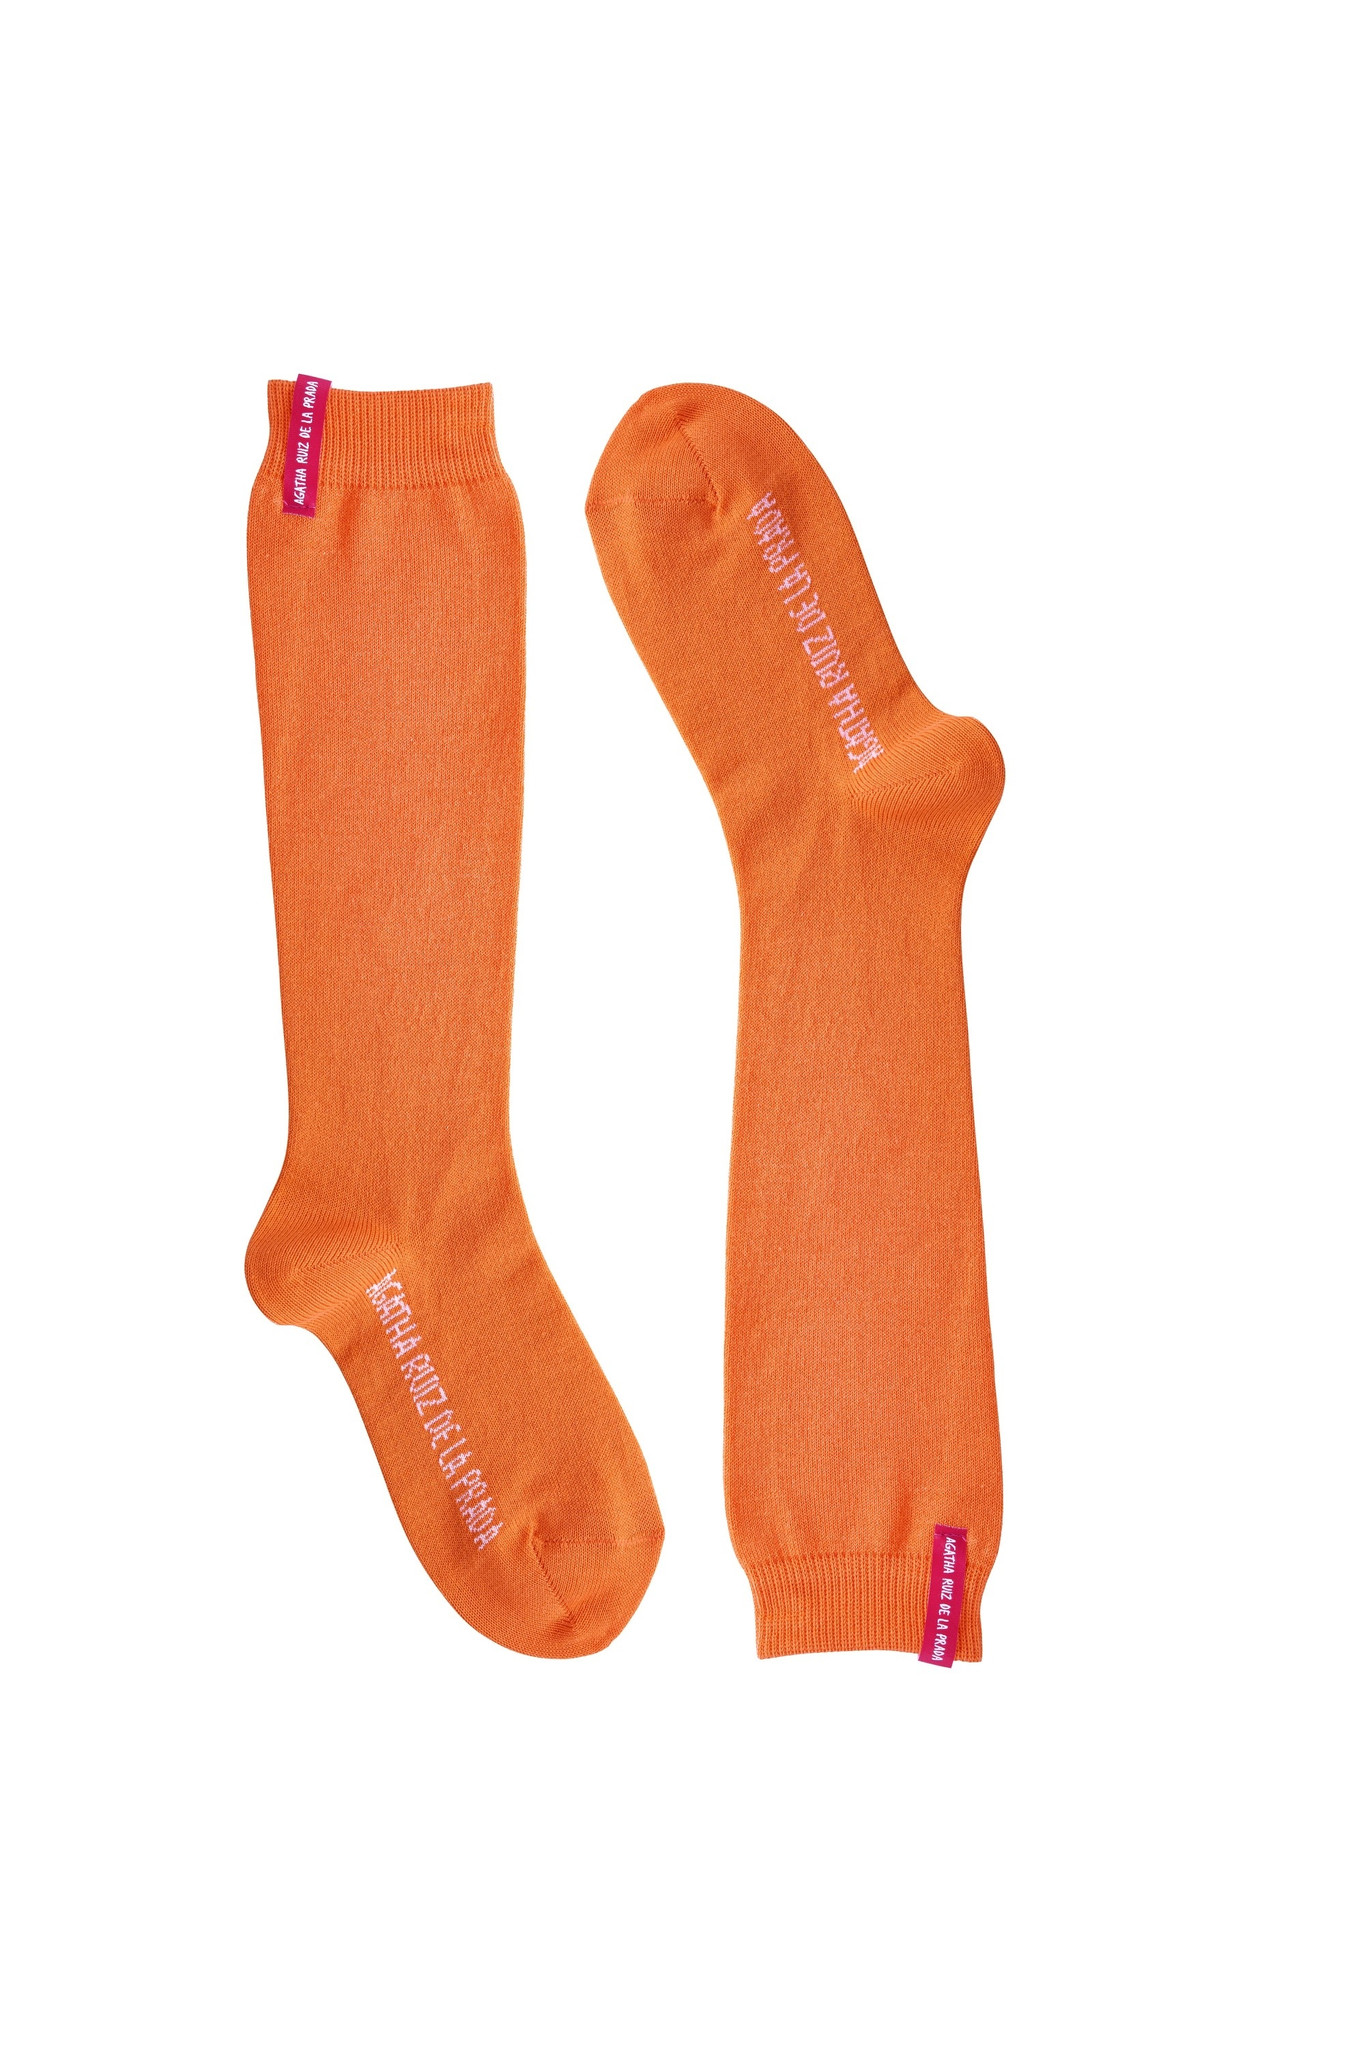 Calcetines Mujer  Calcetines Algodón Rombos Granate Naranja